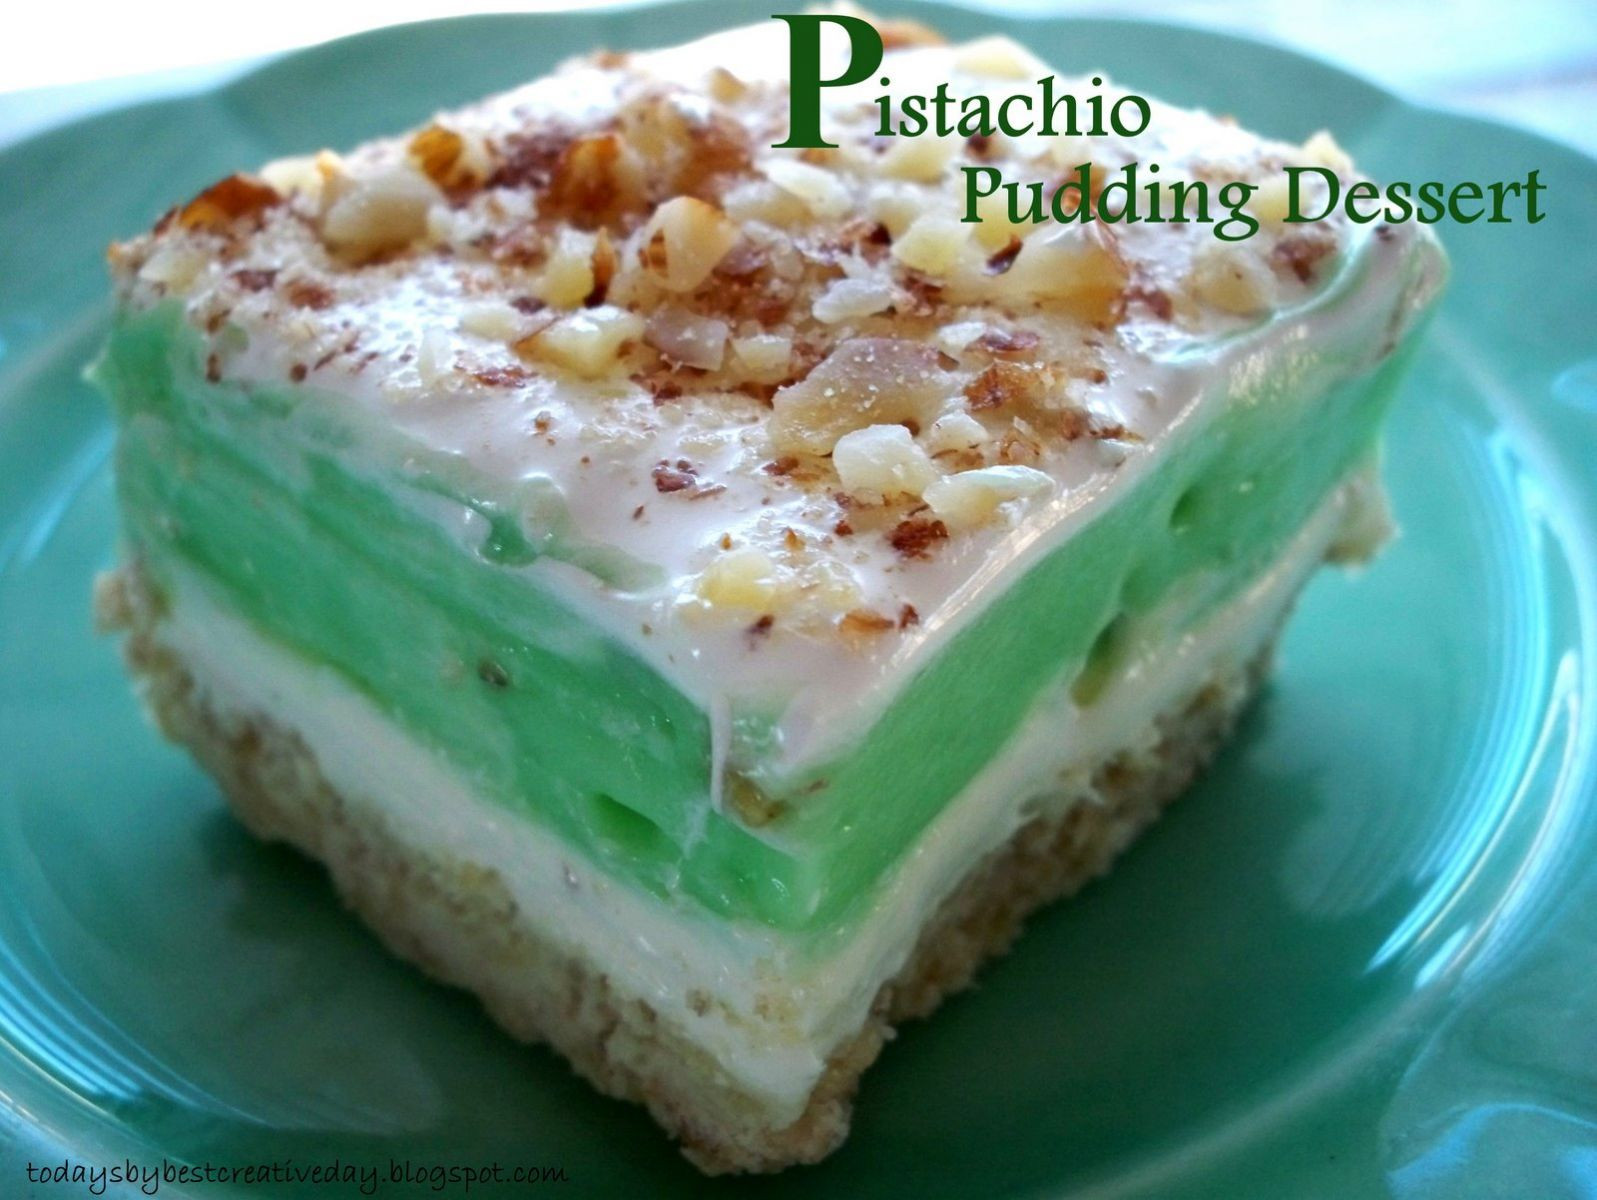 Pistachio Pudding Dessert Recipes
 Top 5 Pistachio Pudding Desserts For Kids by festivalfoods